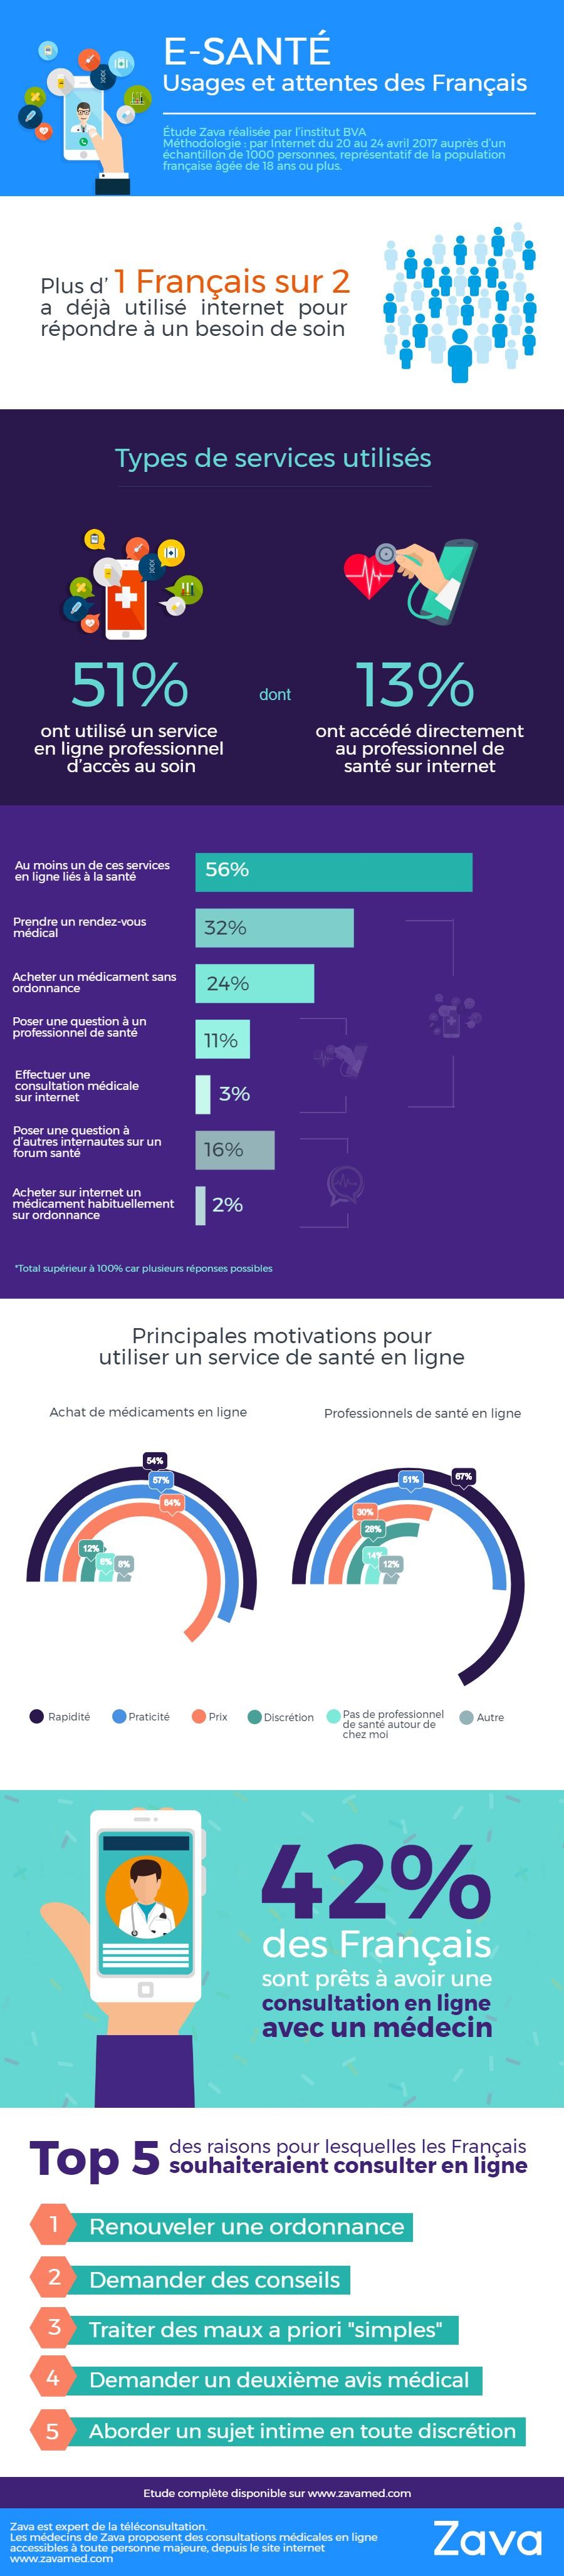 Infographie : usage e-santé des français